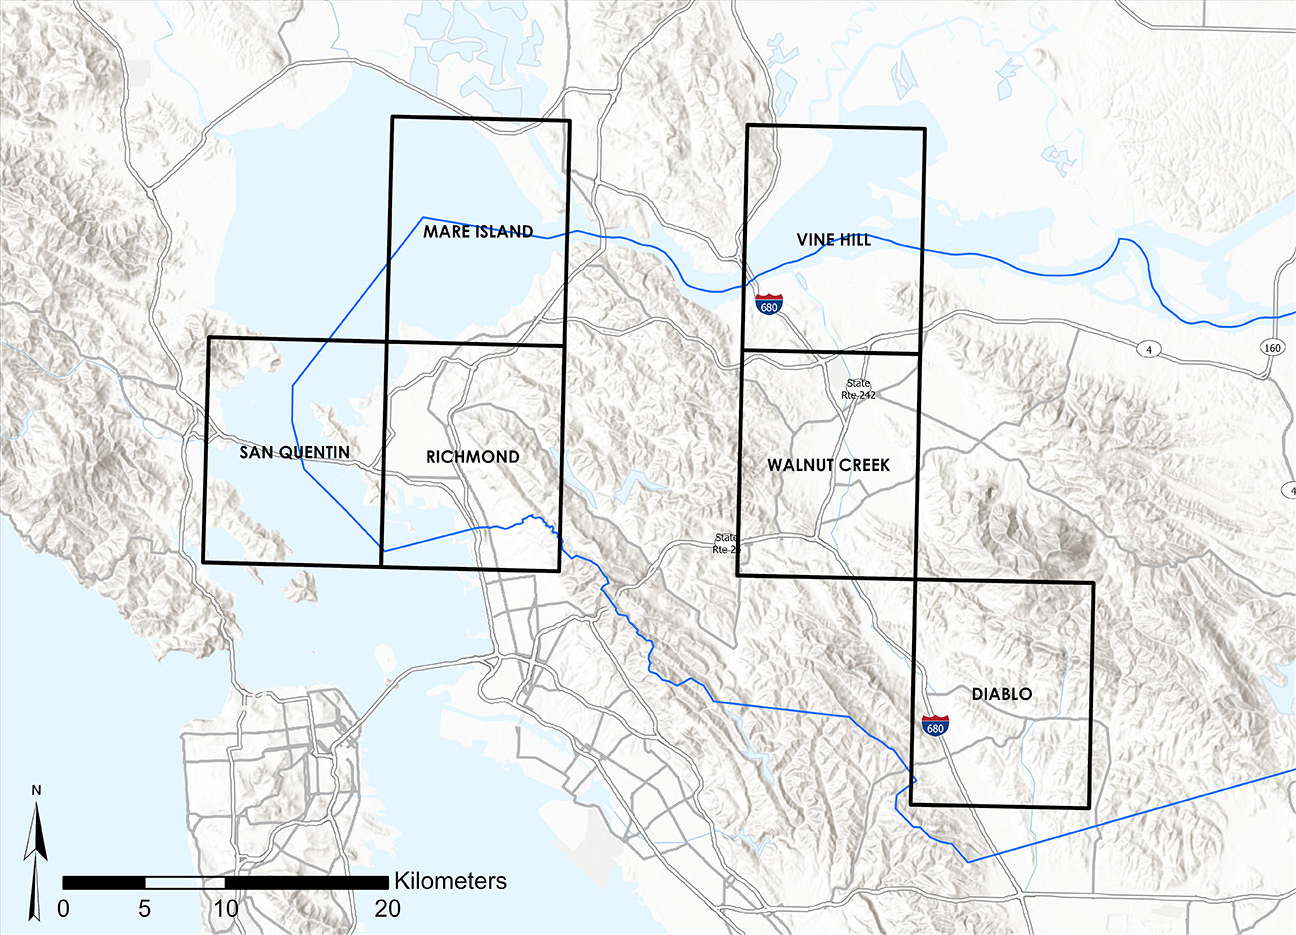 The Seismic Hazard Zone maps in this release cover the following quadrangles: Mare Island, Richmond, San Quentin, Vine Hill, Walnut Creek, and Diablo. All are within Contra Costa County.